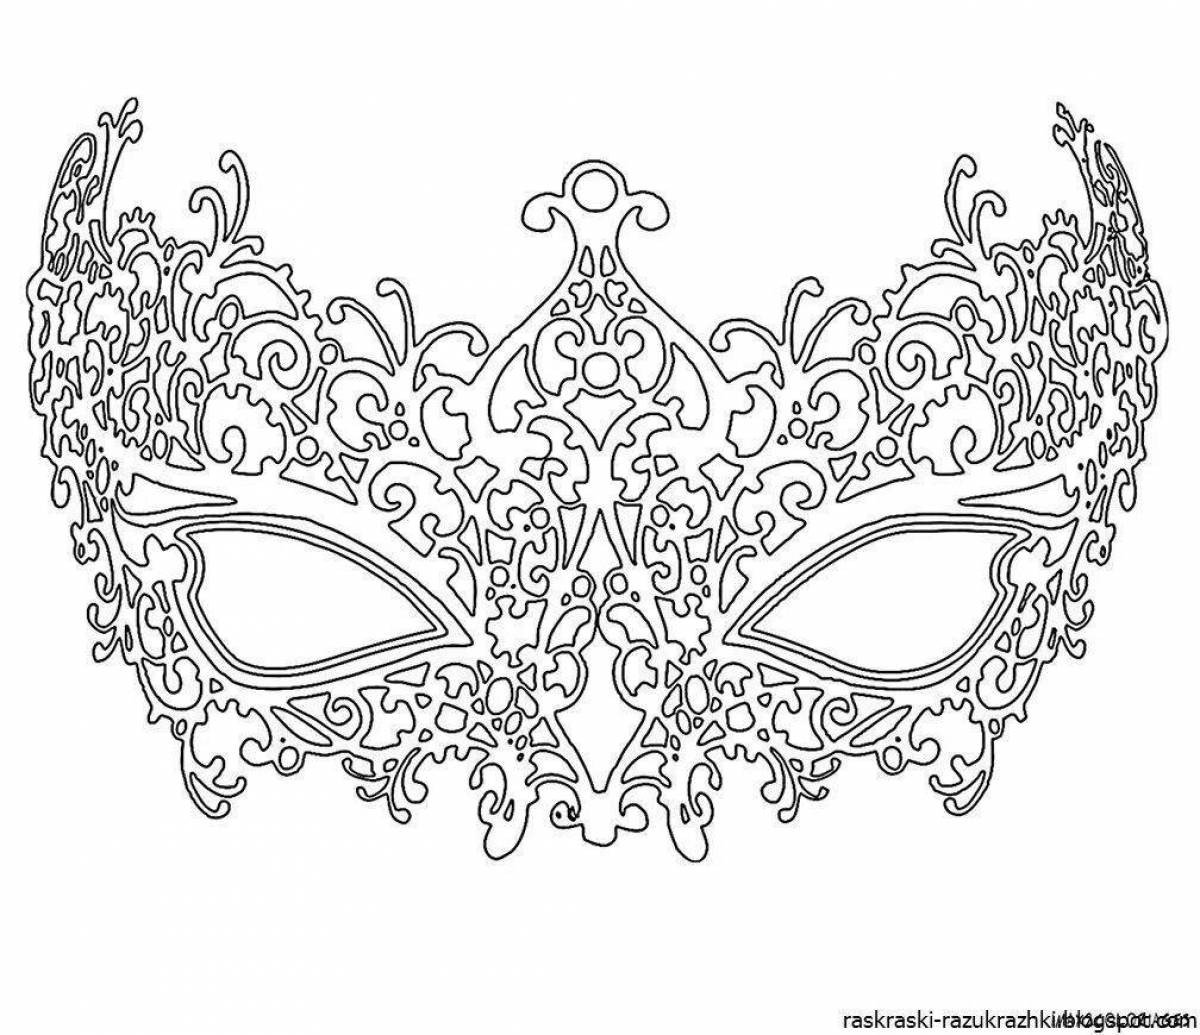 Masquerade mask #3